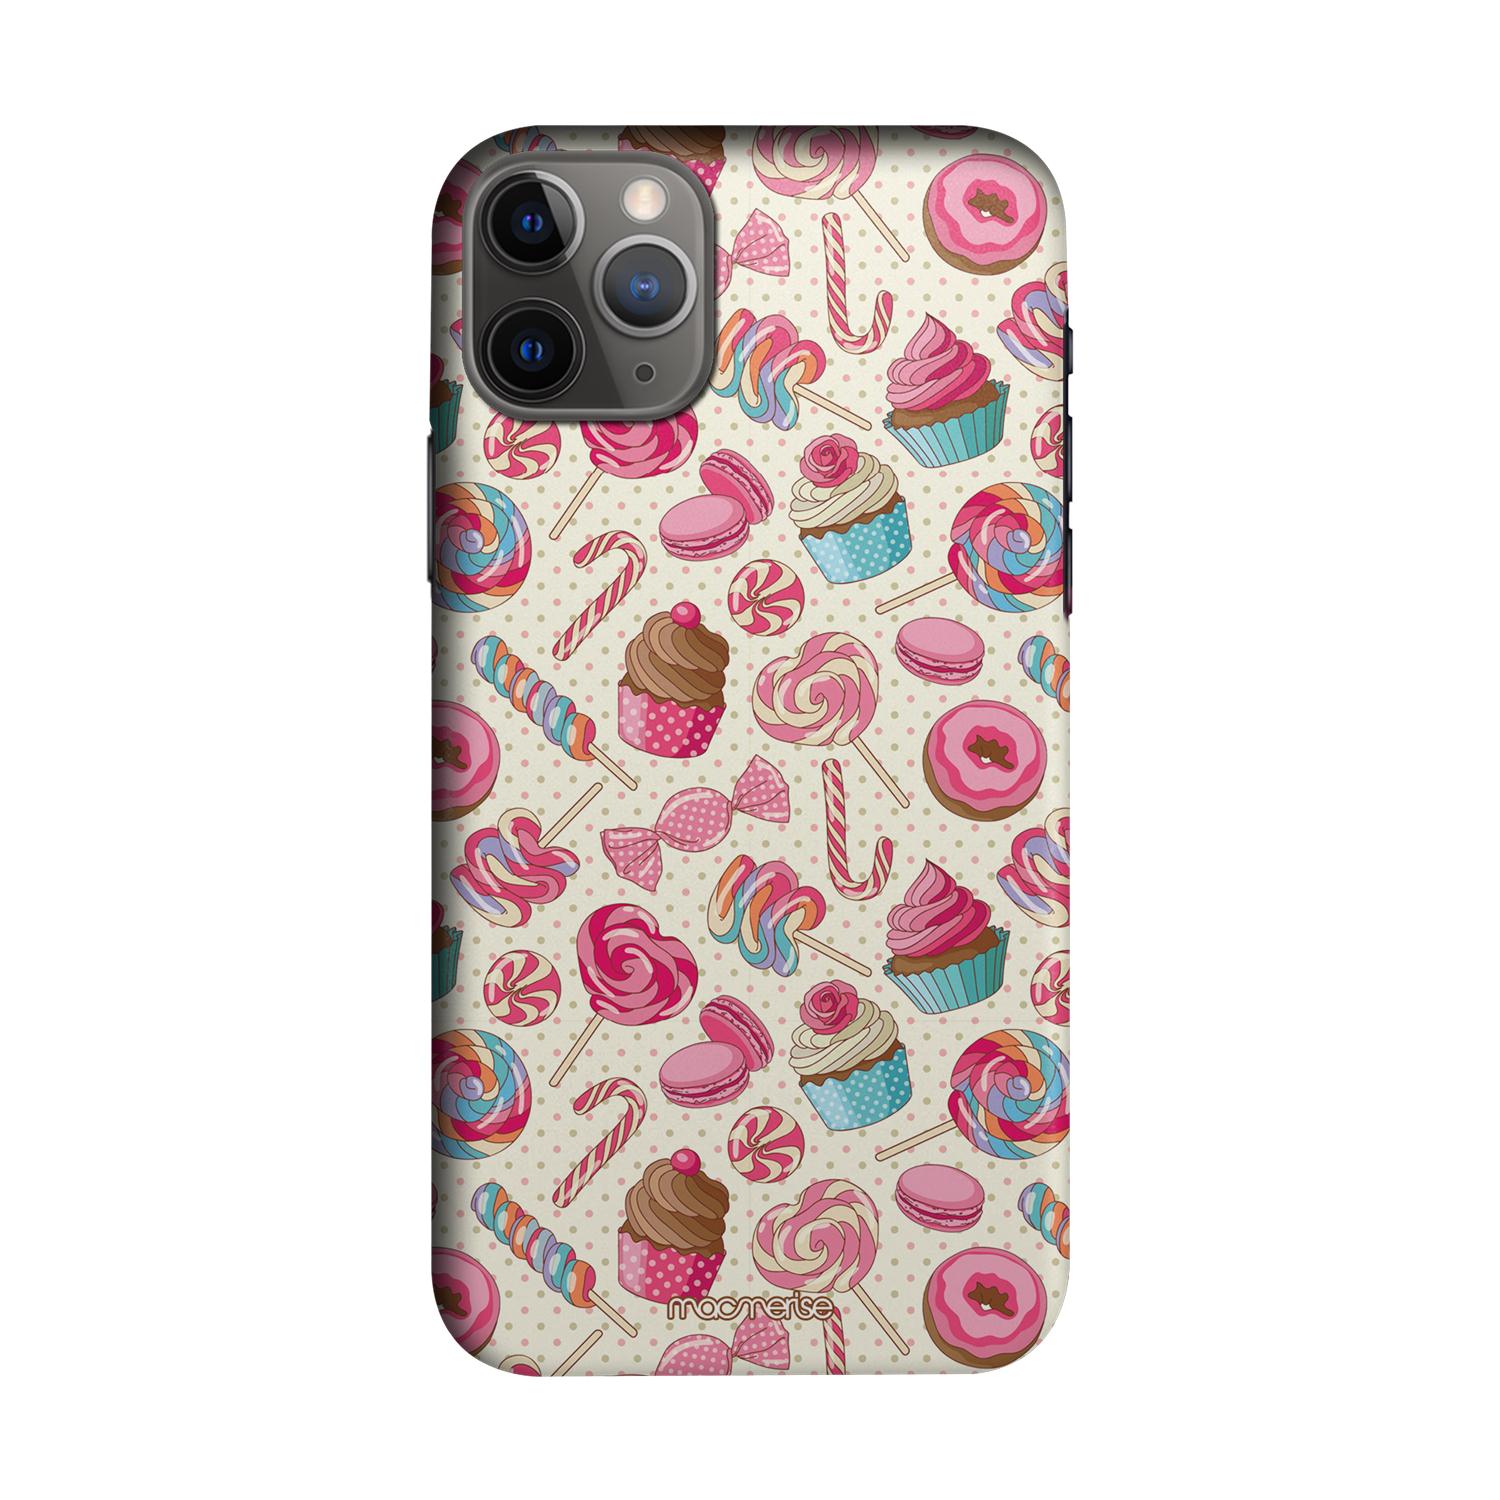 Sugar Rush - Sleek Phone Case for iPhone 11 Pro Max